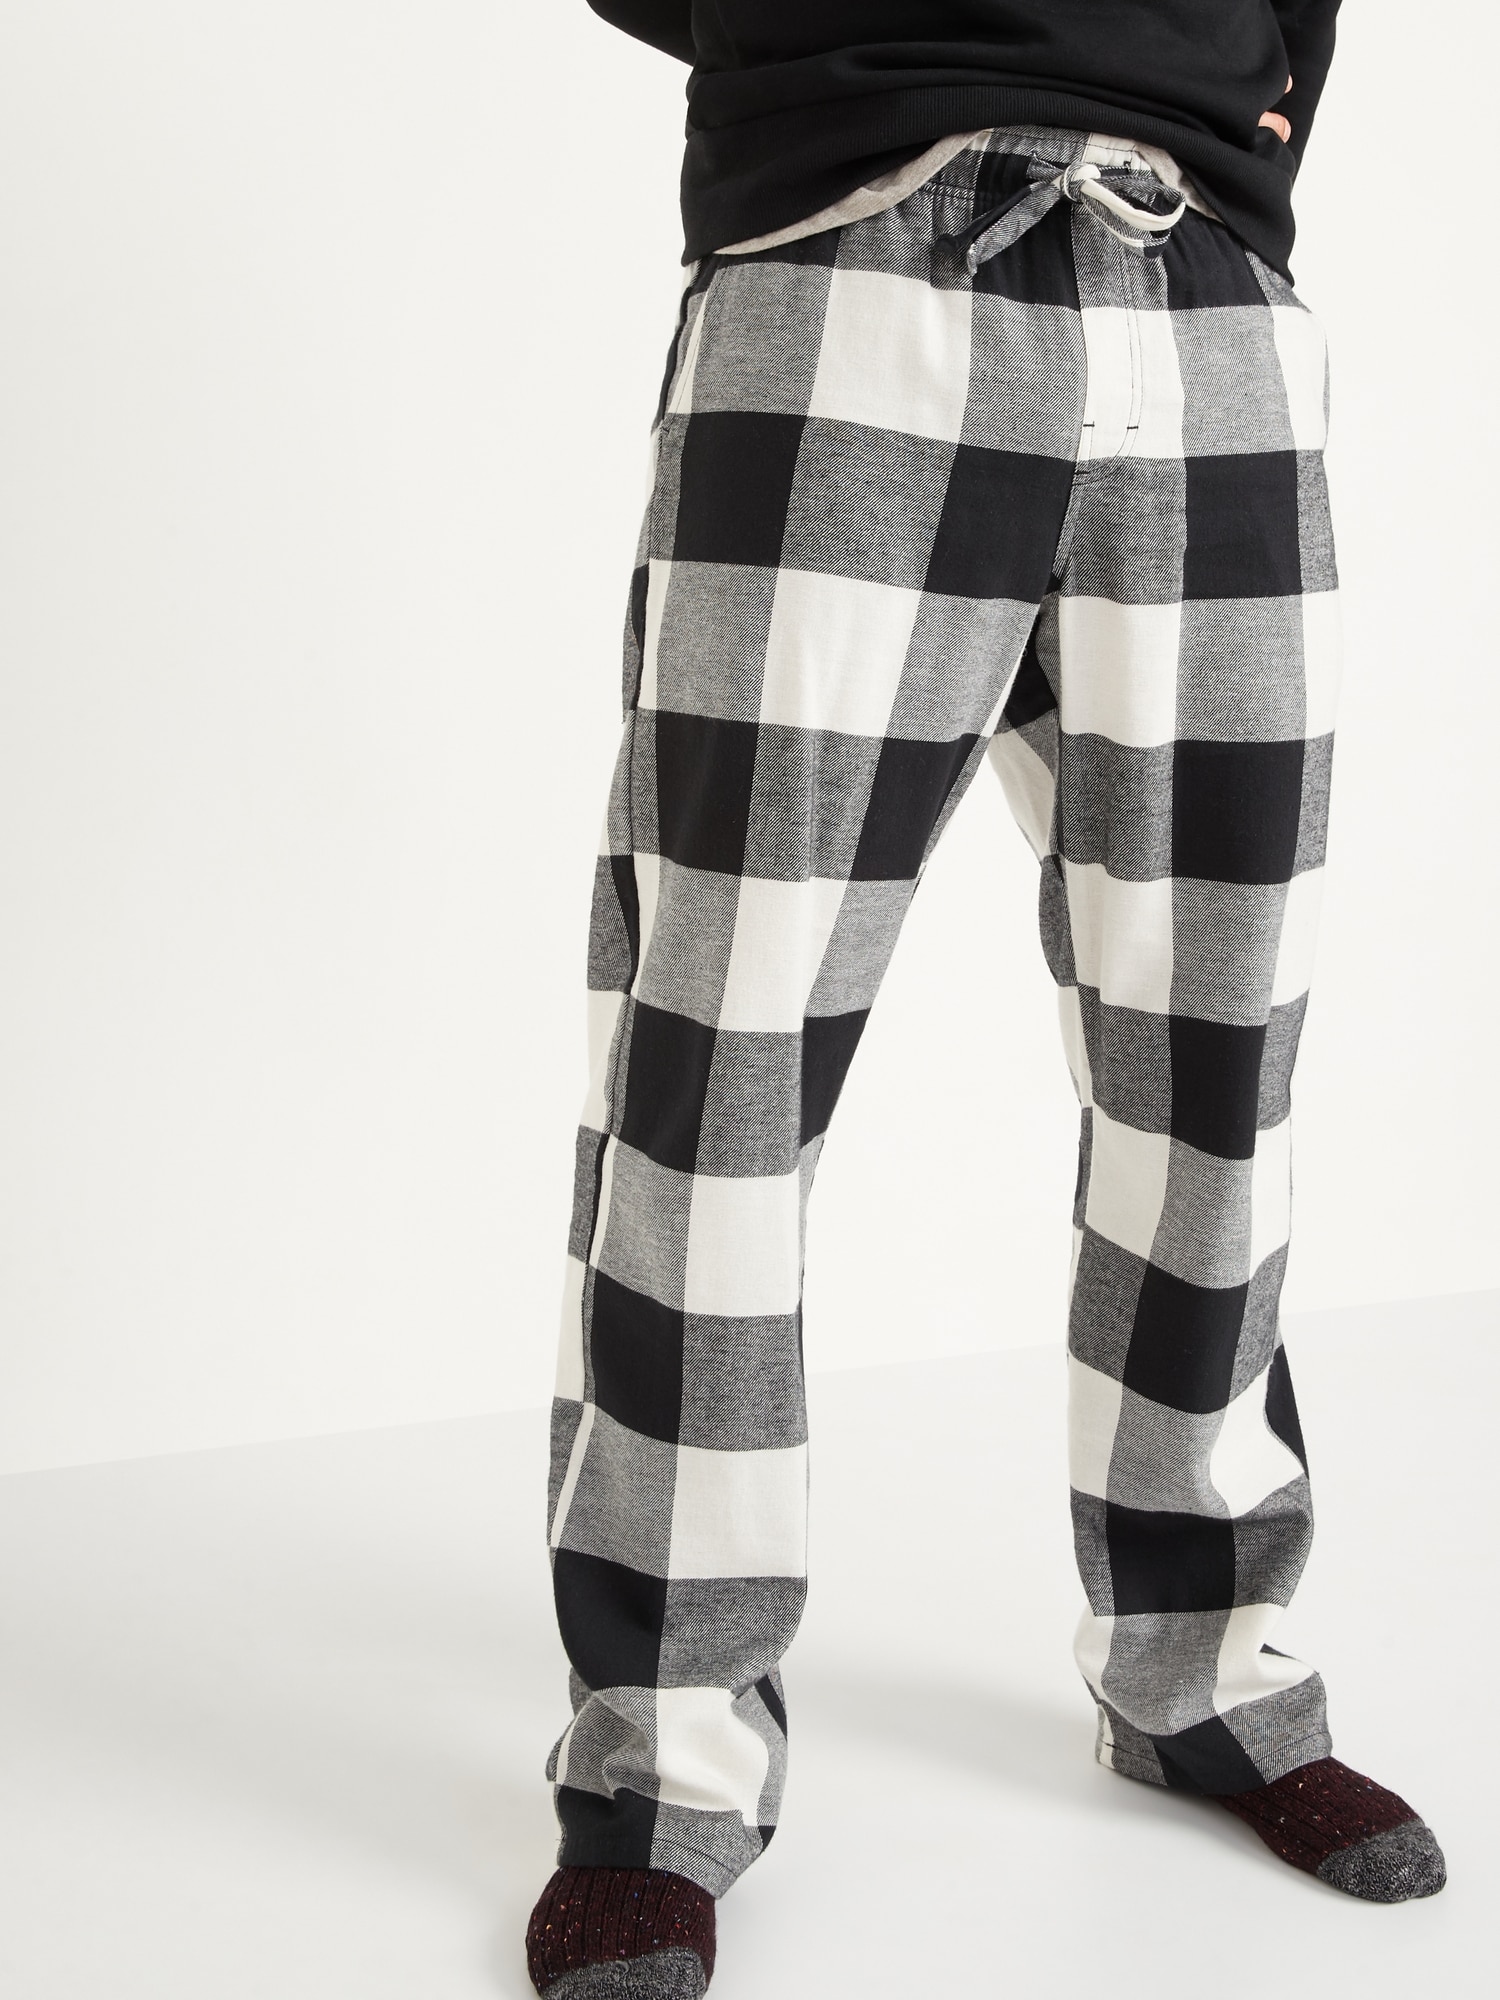 Black and White Buffalo Plaid Pants, Flannel Pajama Pants, Adult